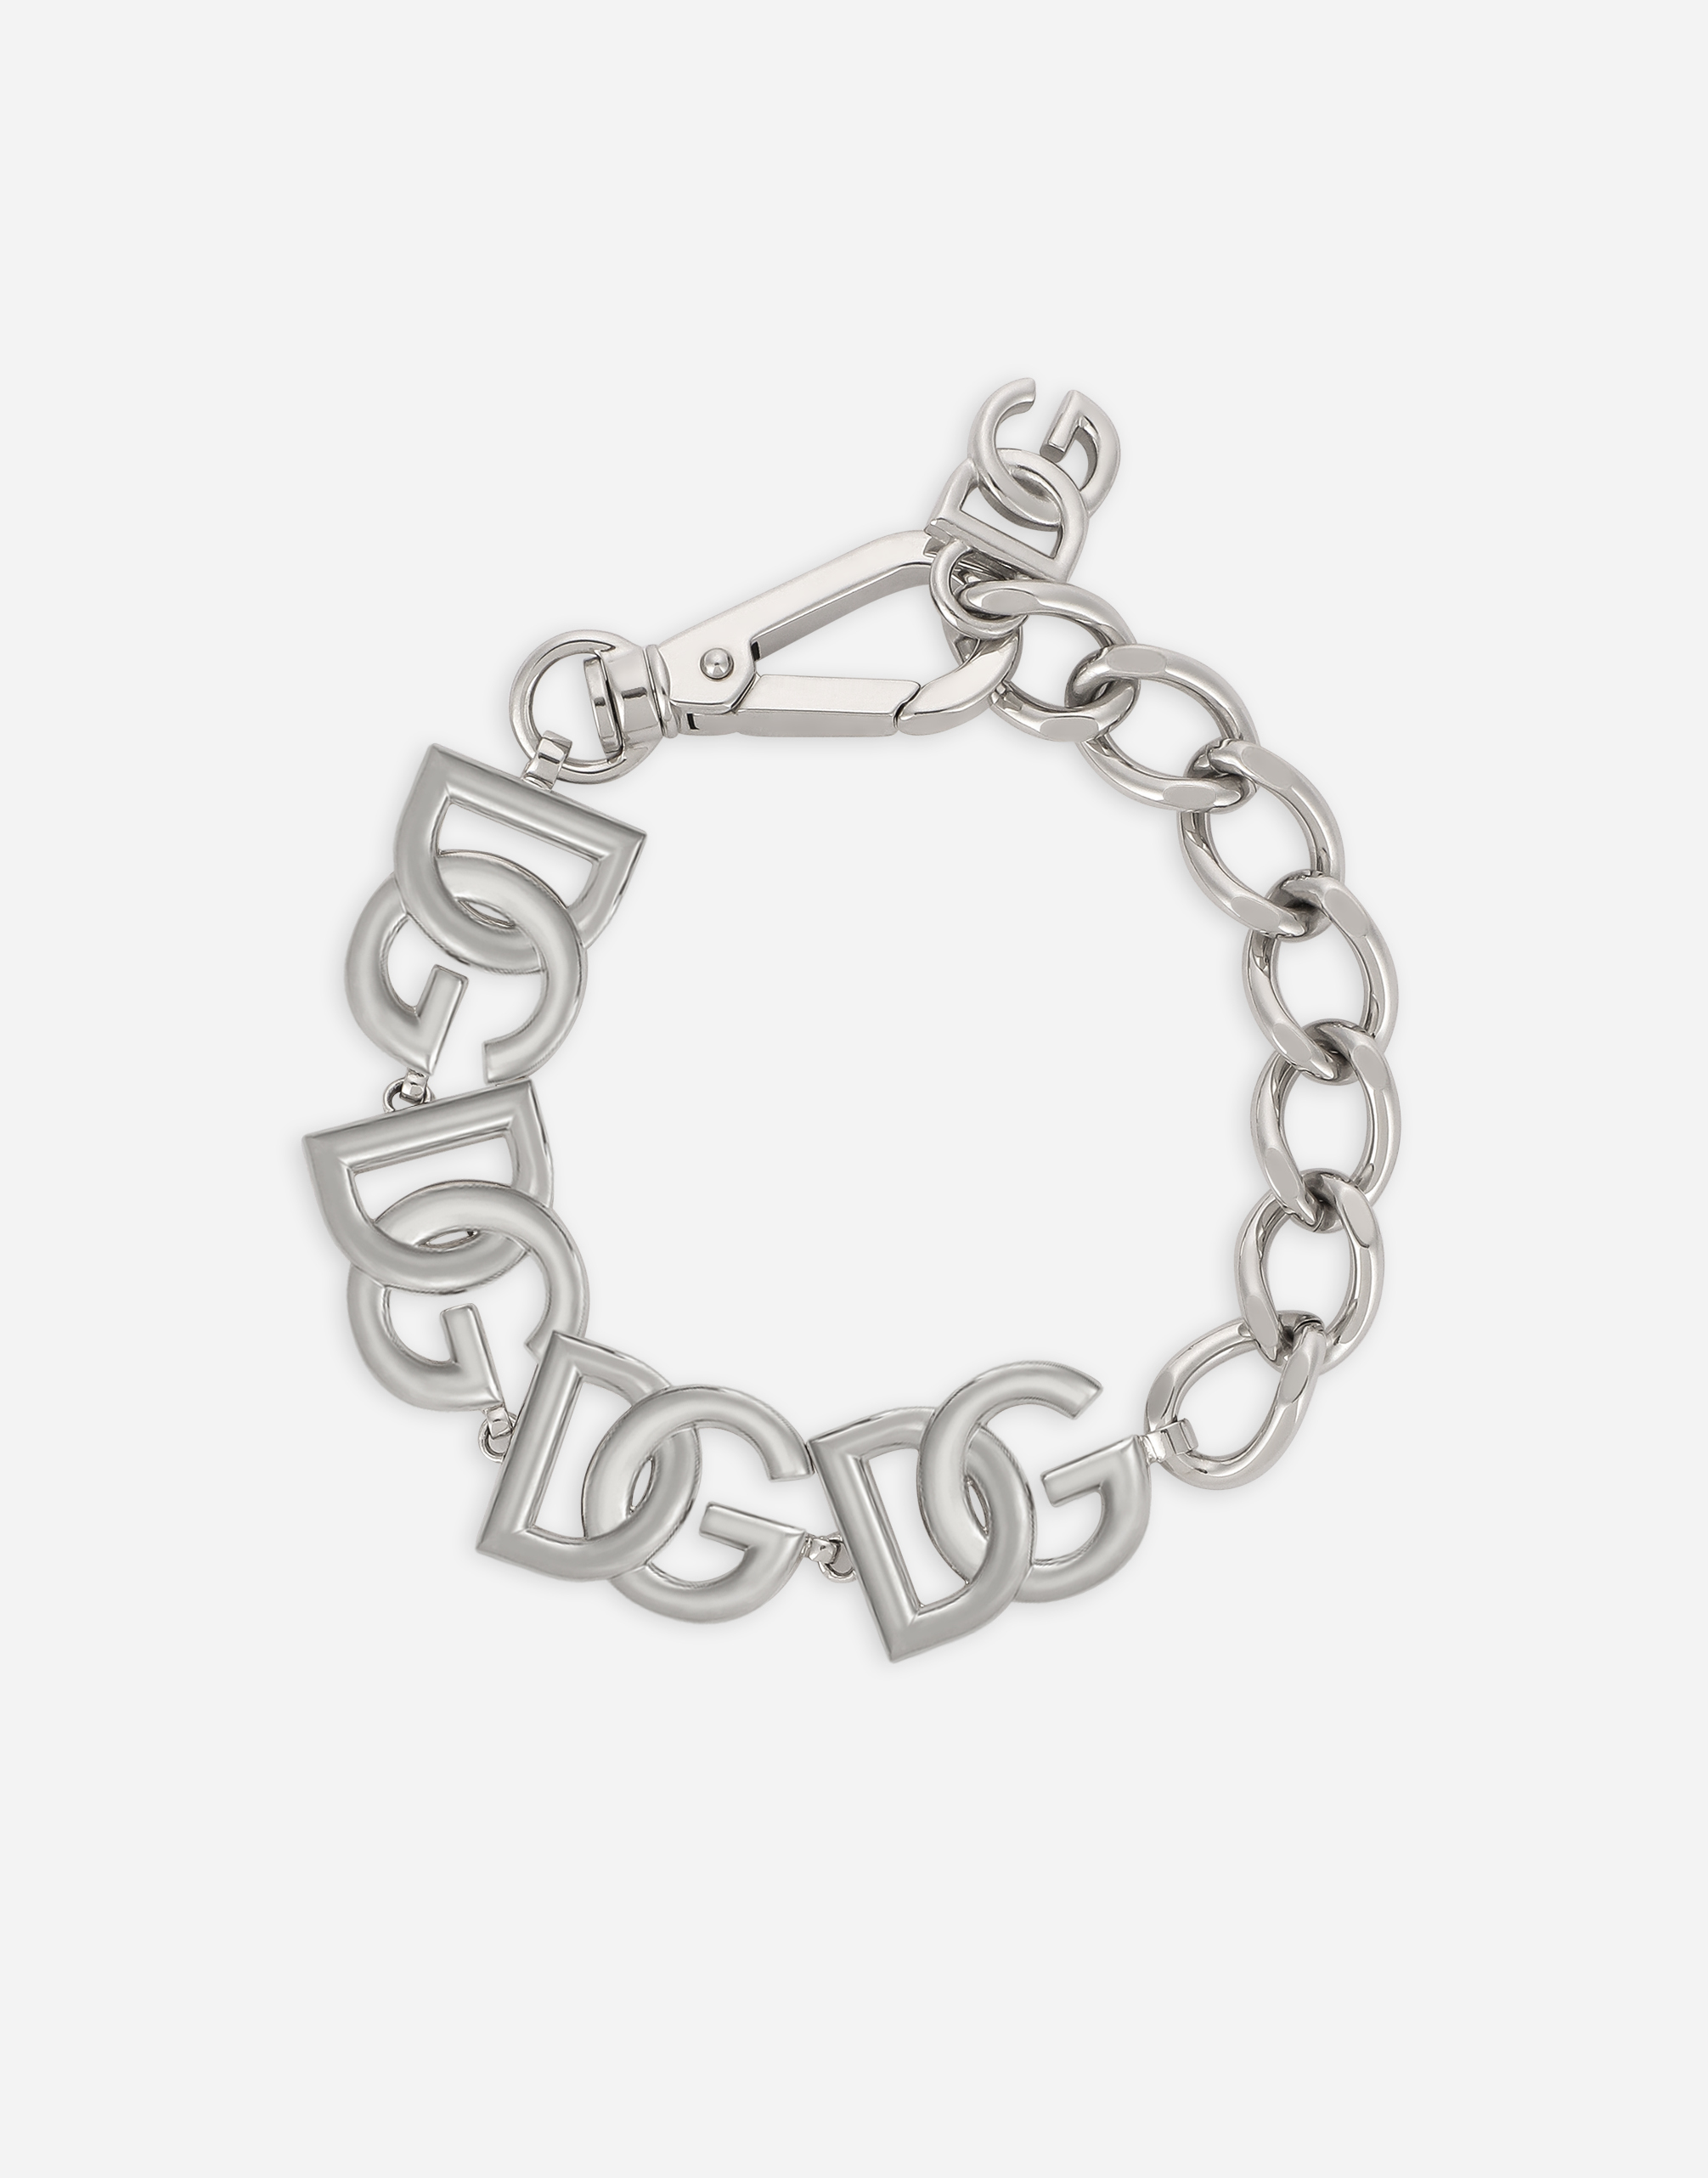 Bracelet with DG logos in Silver